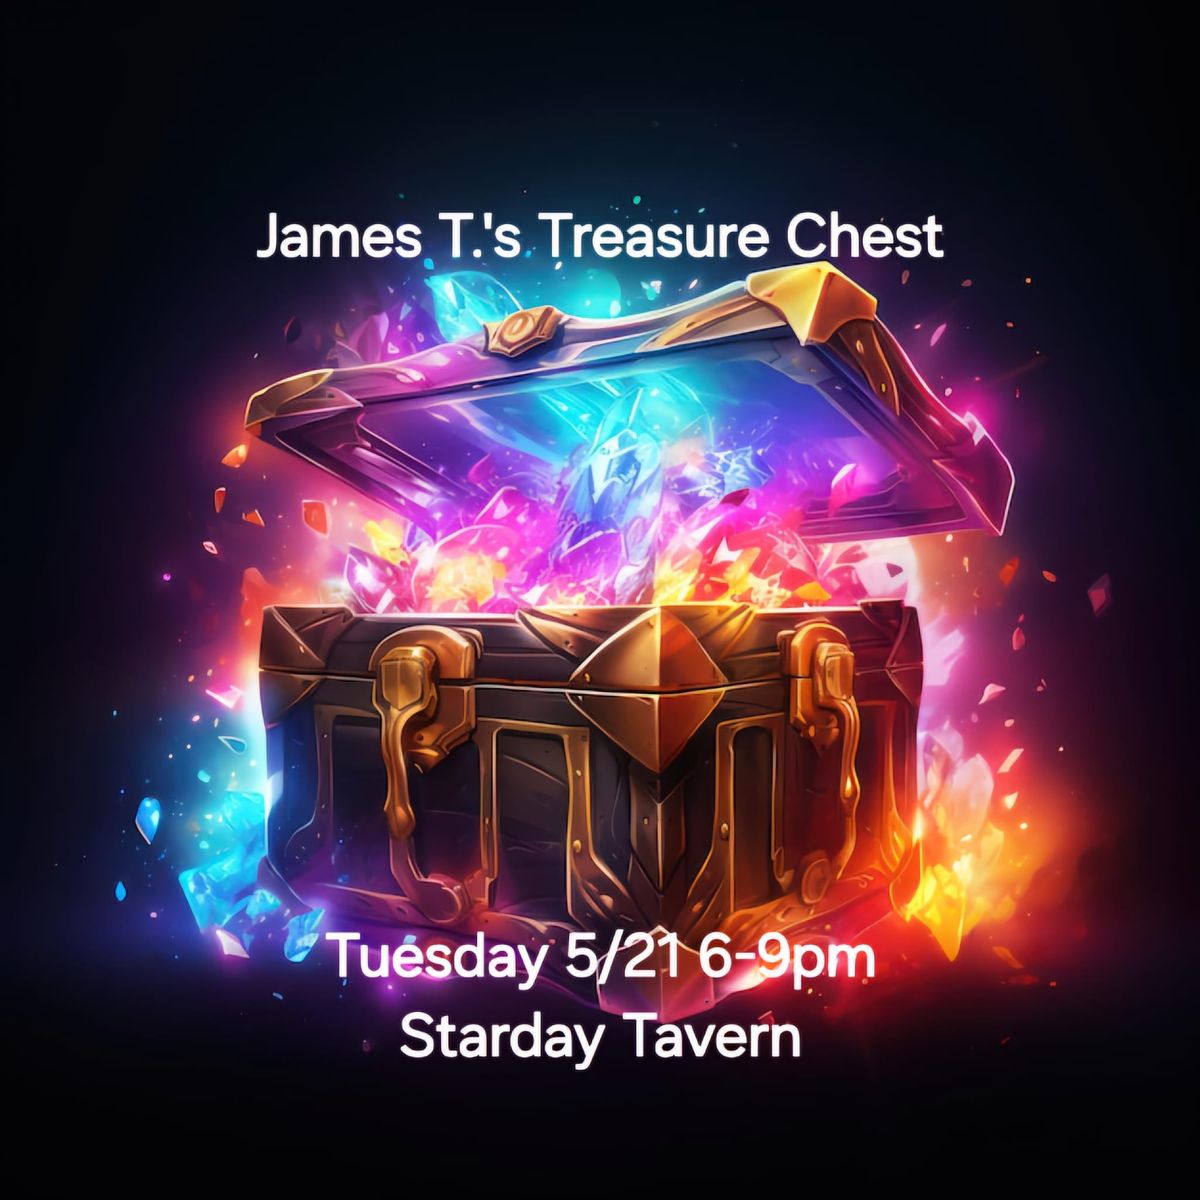 James T's Treasure Chest @ The Starday Tavern, 5\/21, 6-9pm